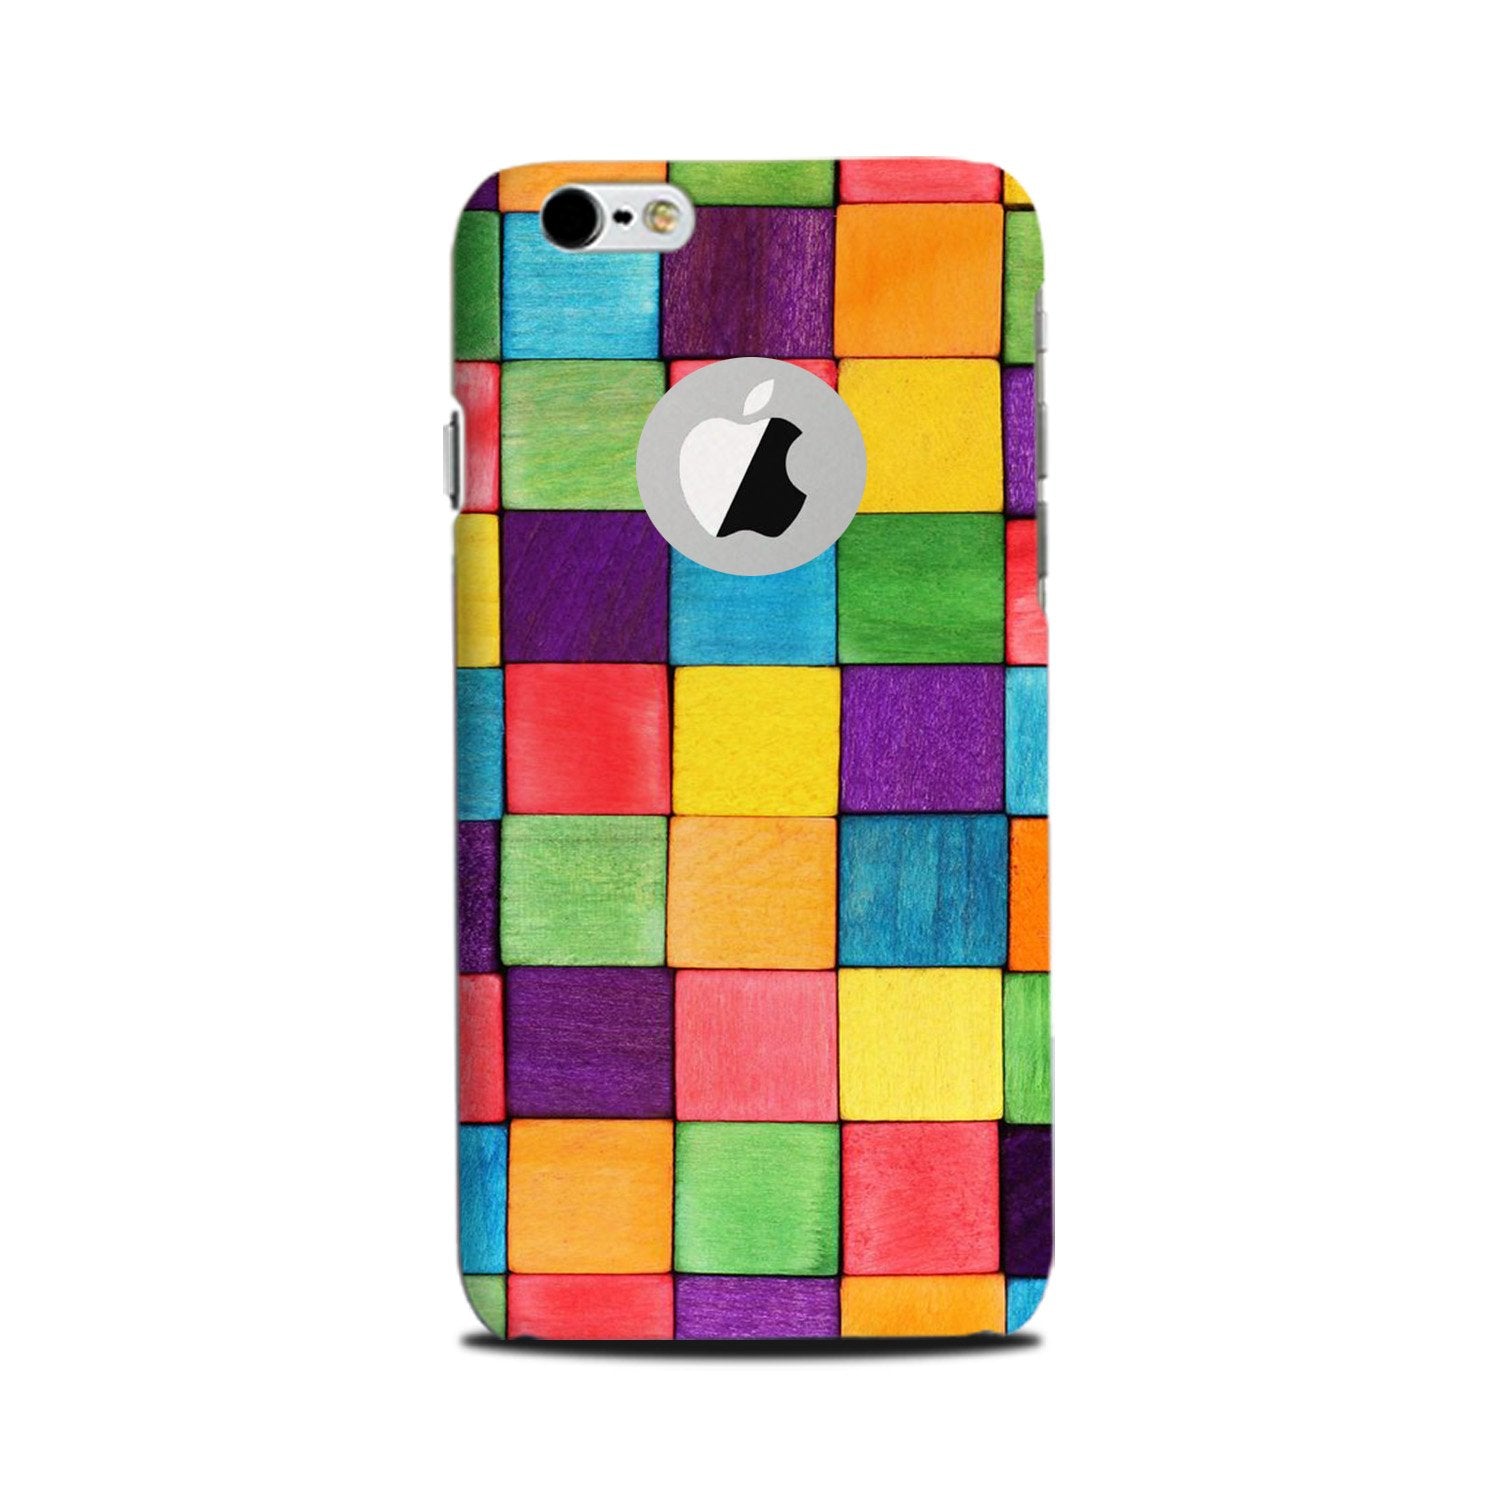 Colorful Square Case for iPhone 6 Plus / 6s Plus logo cut  (Design No. 218)